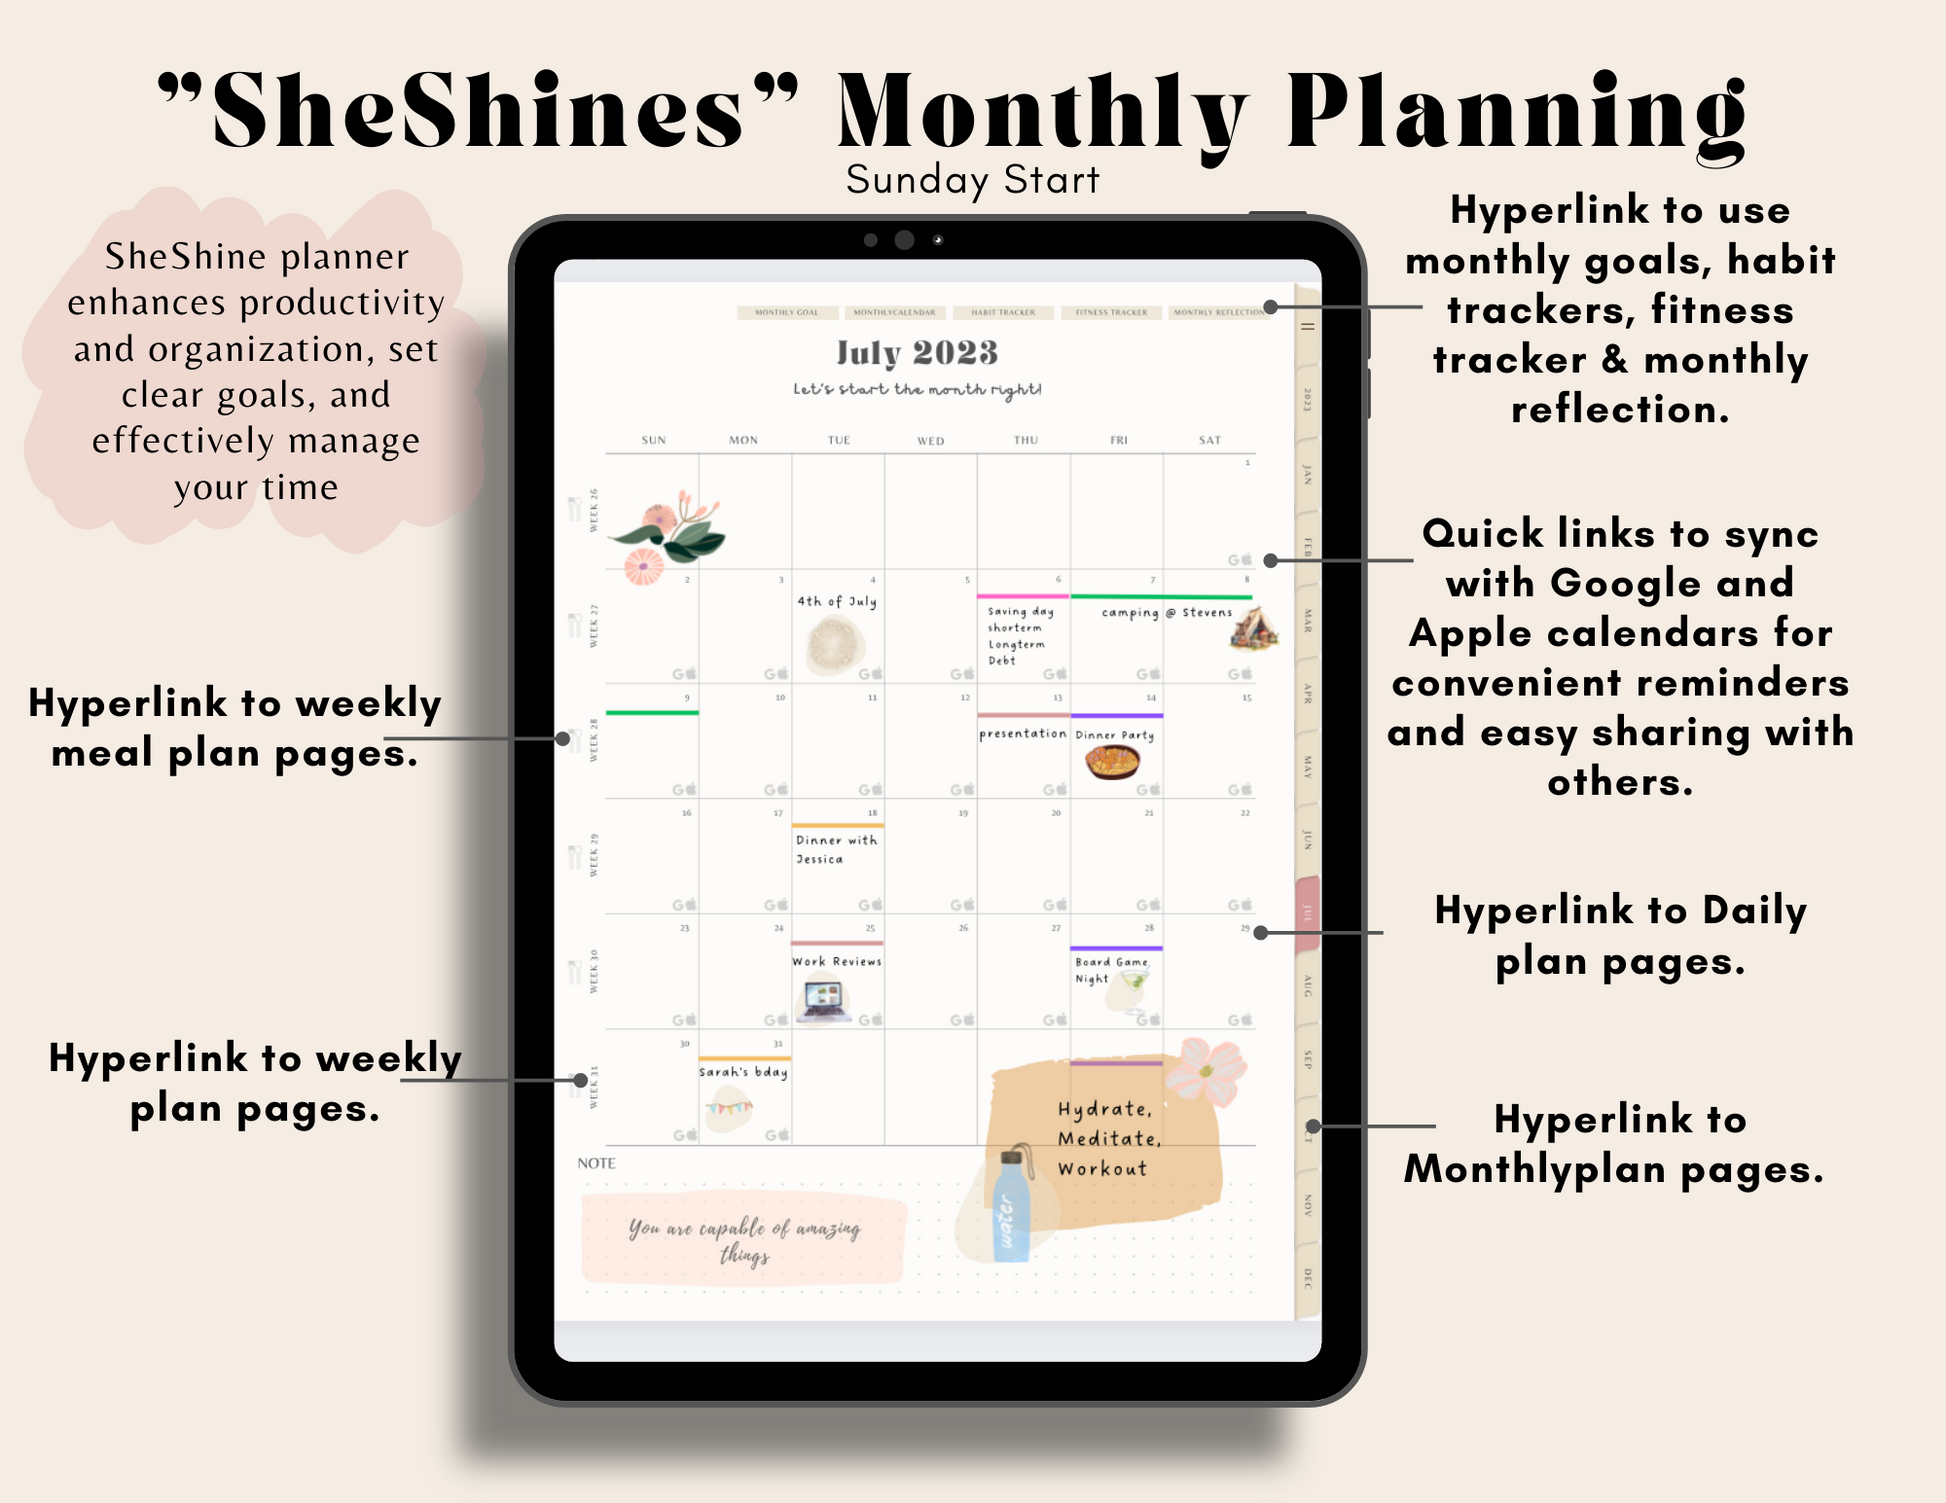 Sheshines digital Planner. hyperlinked google & apple calendar. Simple minimalist planner. Free digital planner.